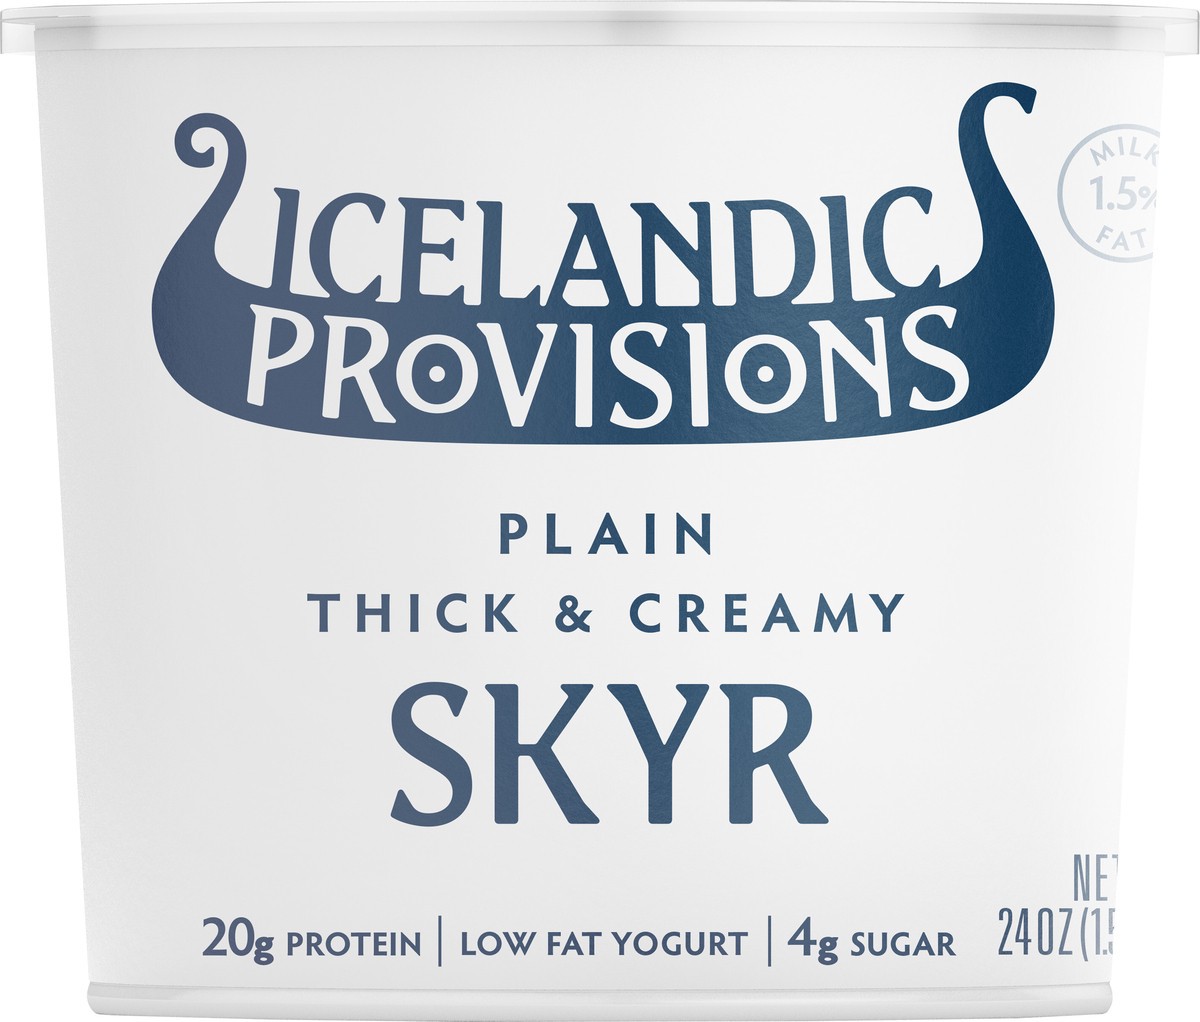 slide 3 of 3, Icelandic Provisions Plain Thick & Creamy Low Fat Skyr 24 oz, 24 oz